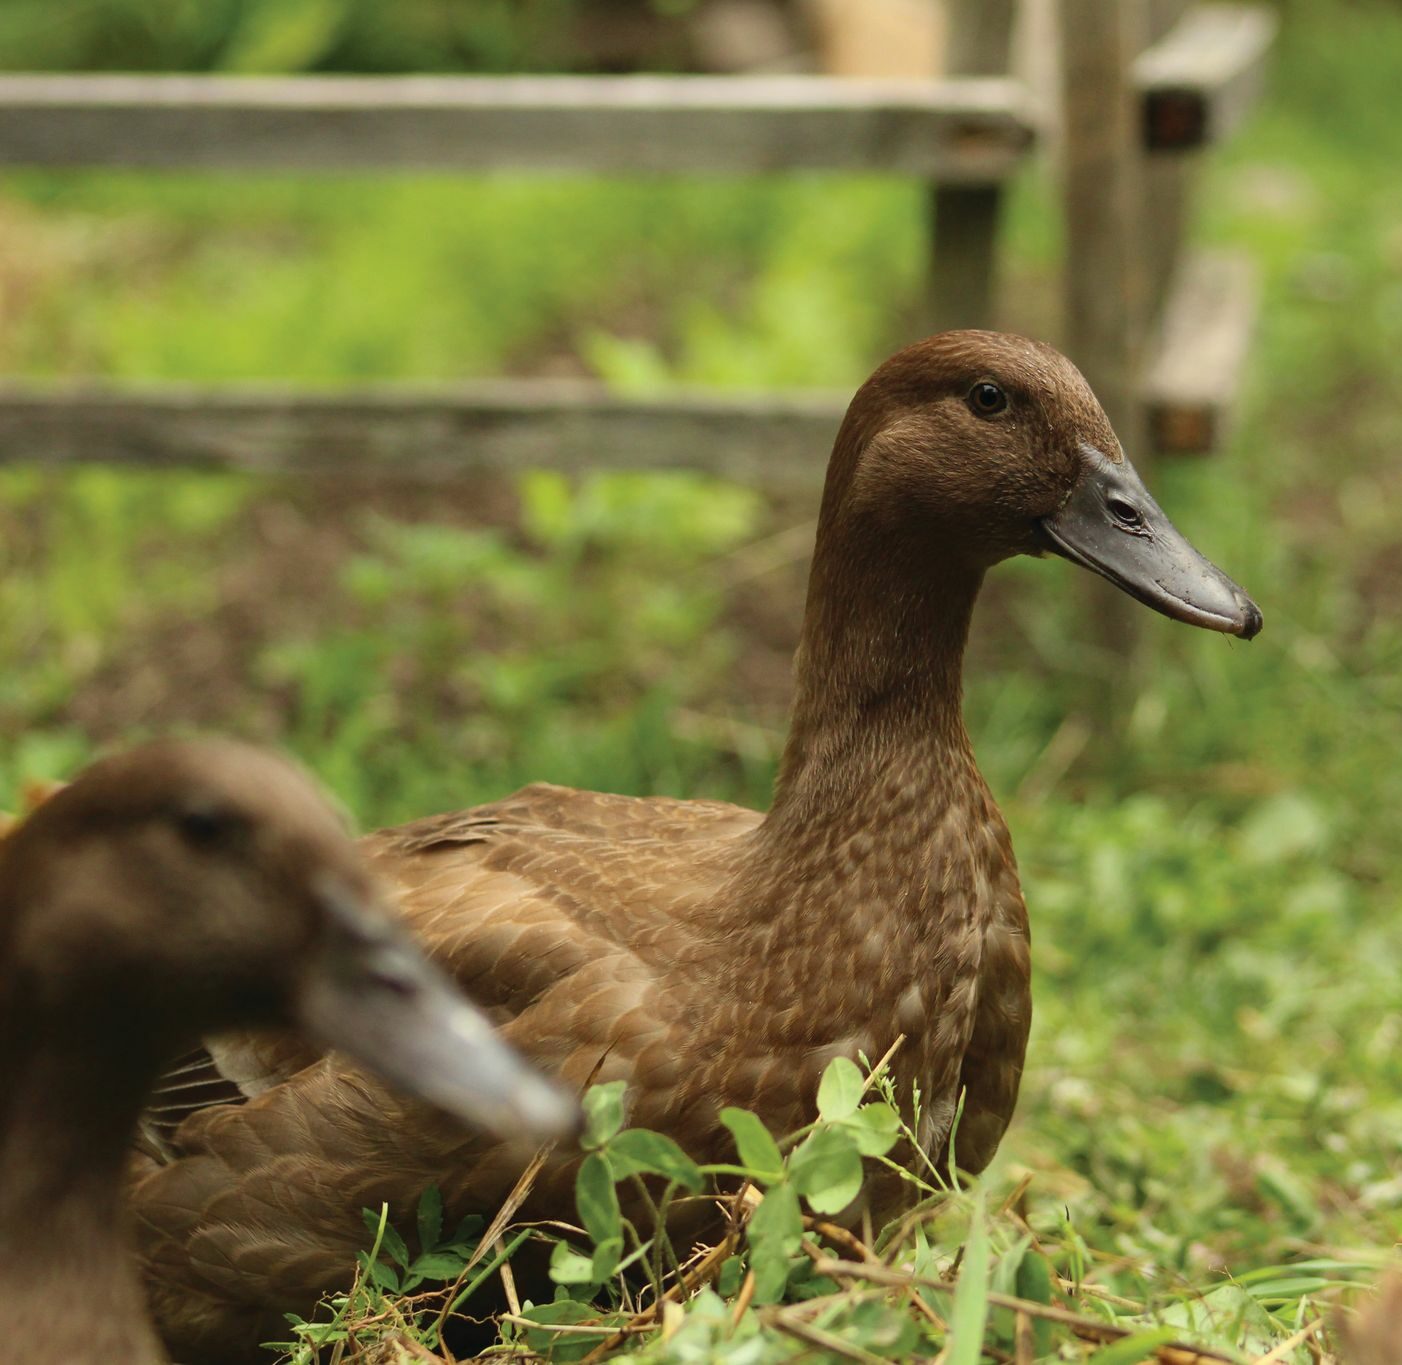 McMurray Hatchery Blog | Favorite Duck Breeds | Khaki Campbell